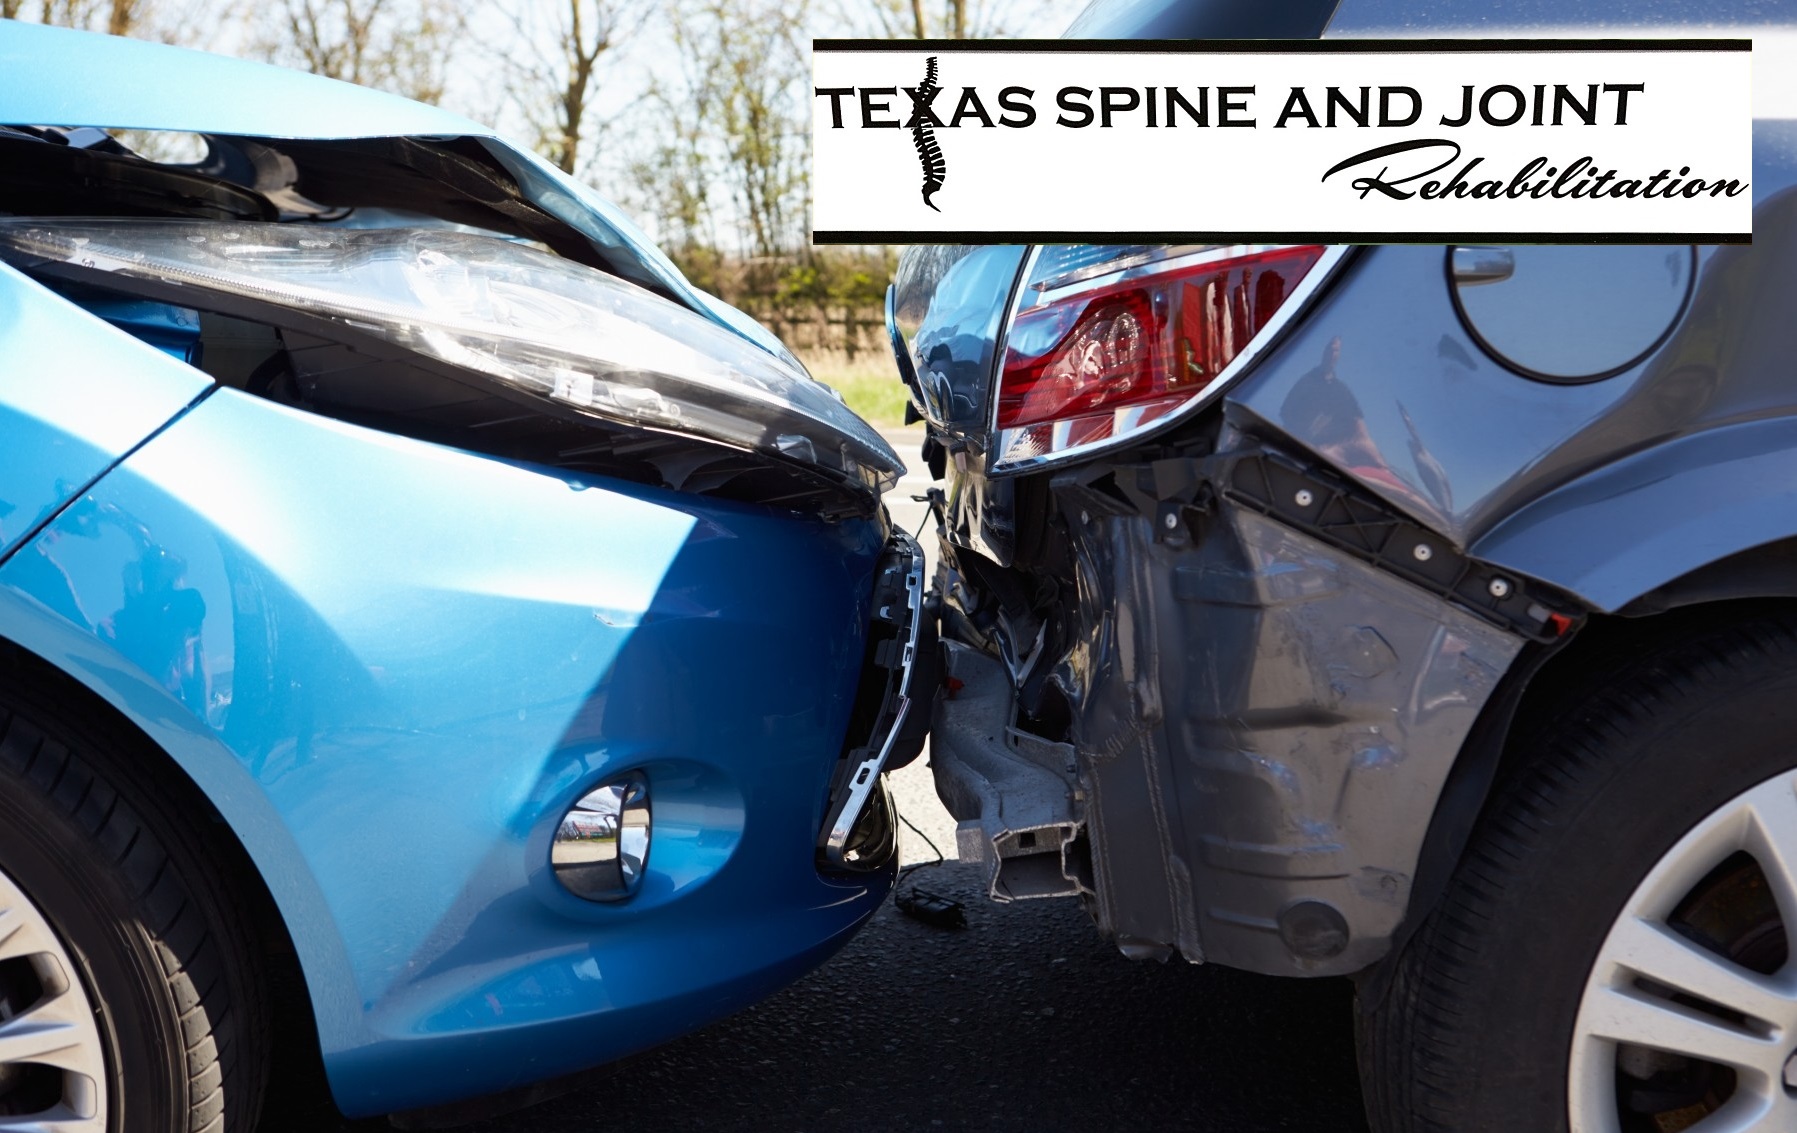 Texas Spine and Joint Rehabilitation